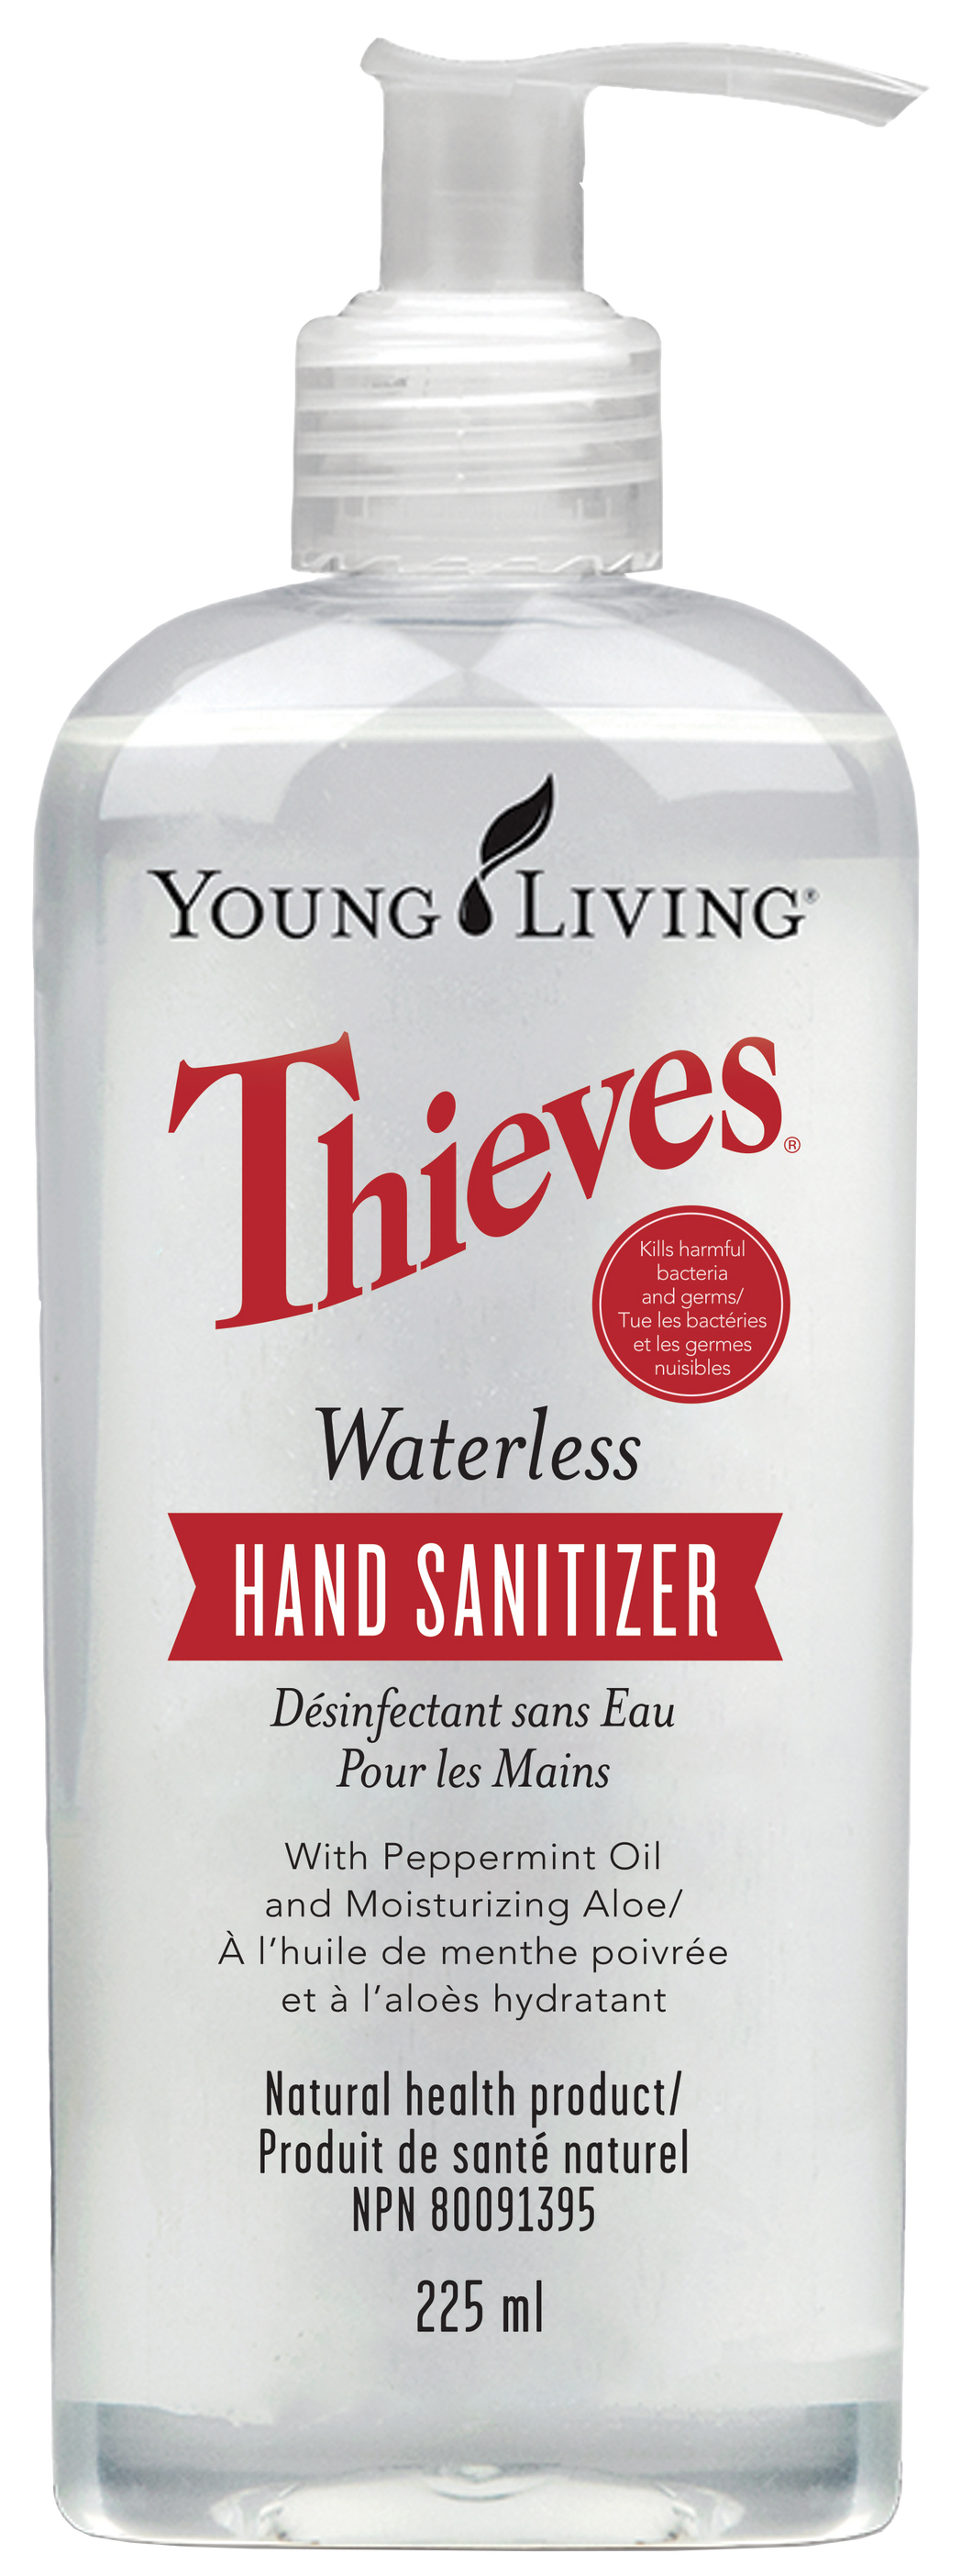 YL - Thieves - Waterless Hand Sanitizer